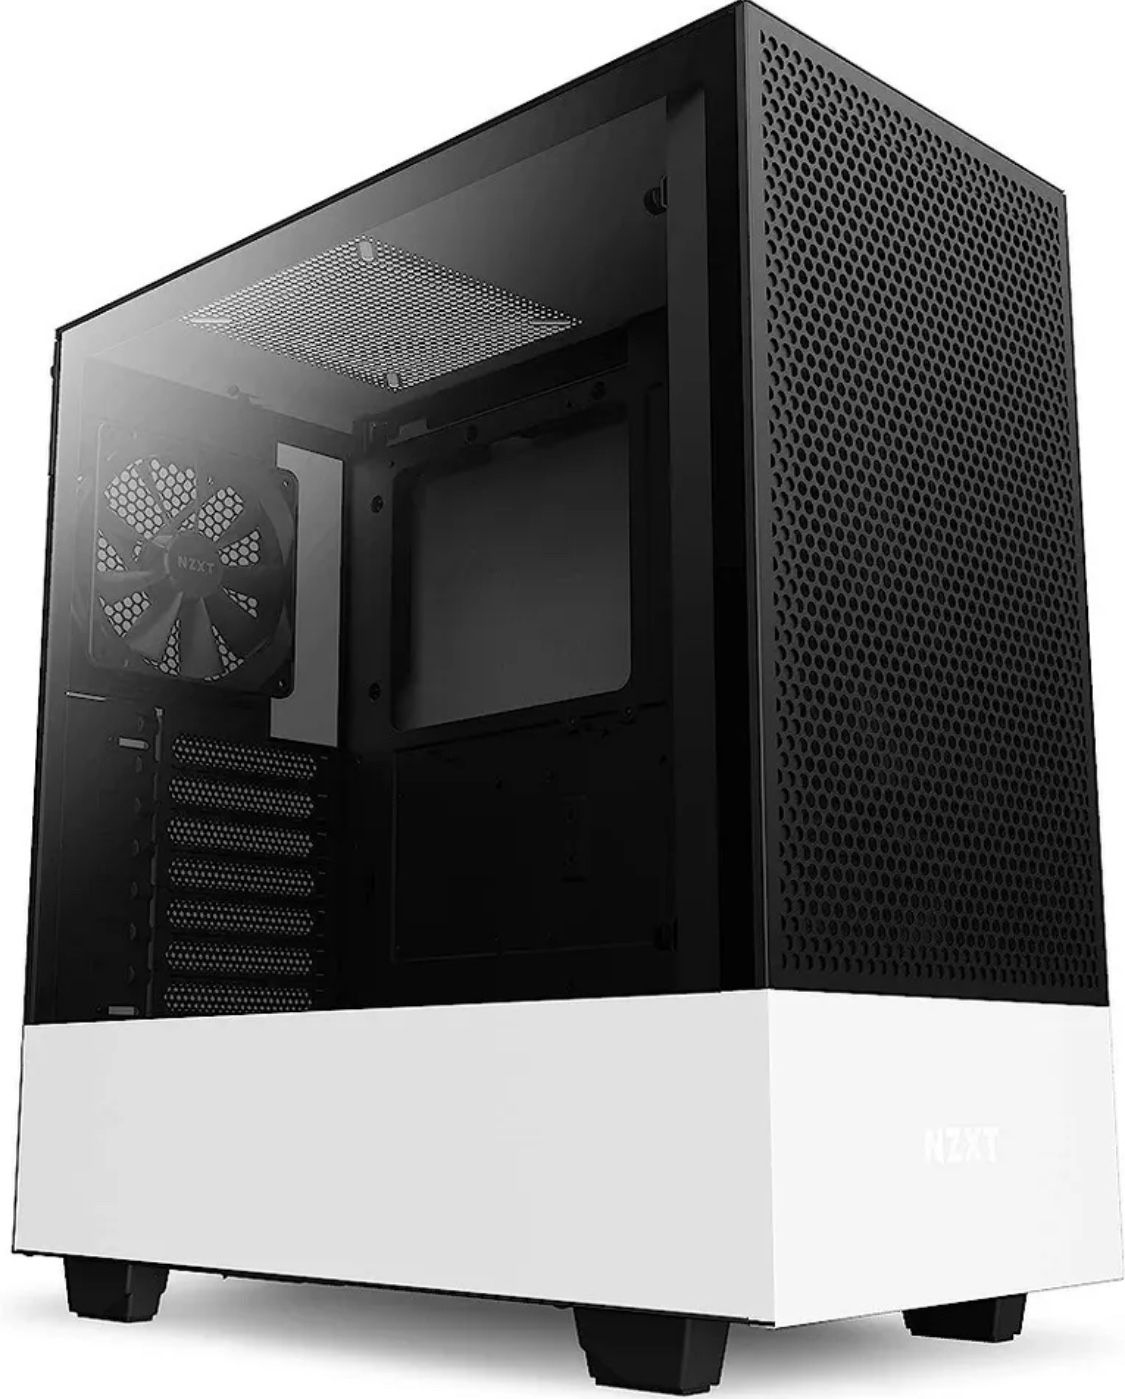 NZXT H510 PC case